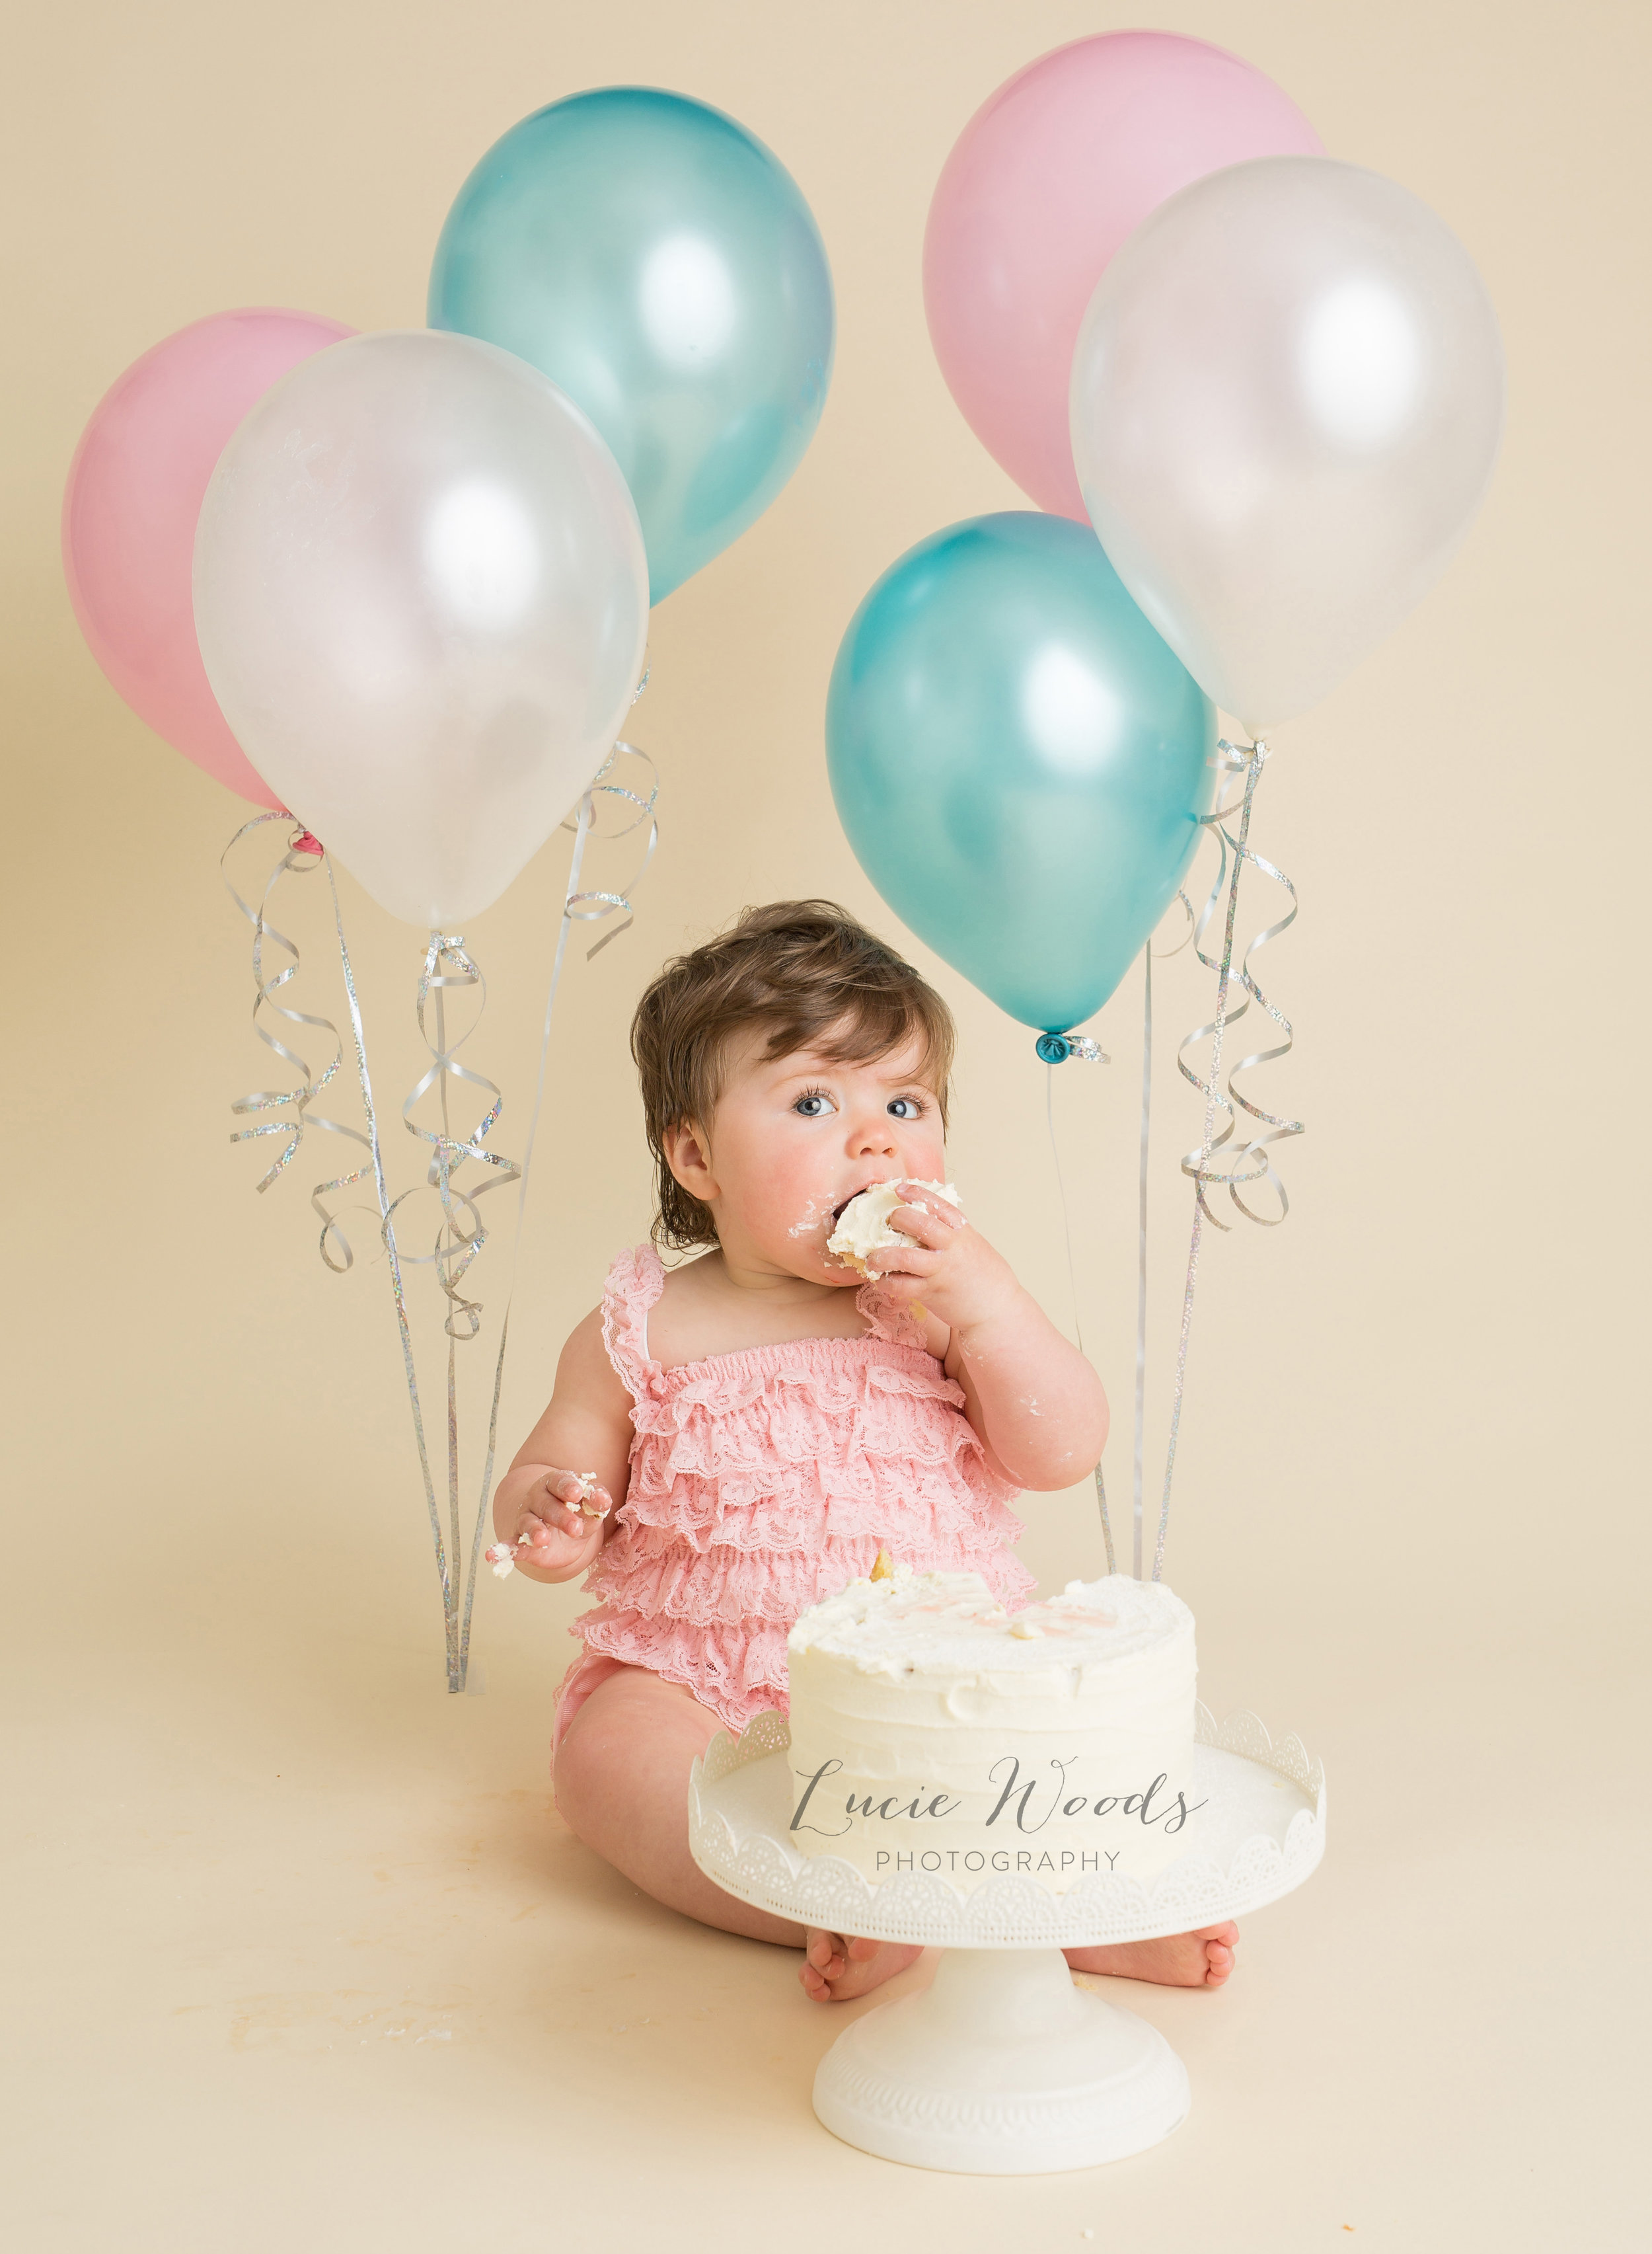 Newborn photographer baby photos photo Manchester Lancashire Rawtenstall Lucie Woods Photography cake smash milestones